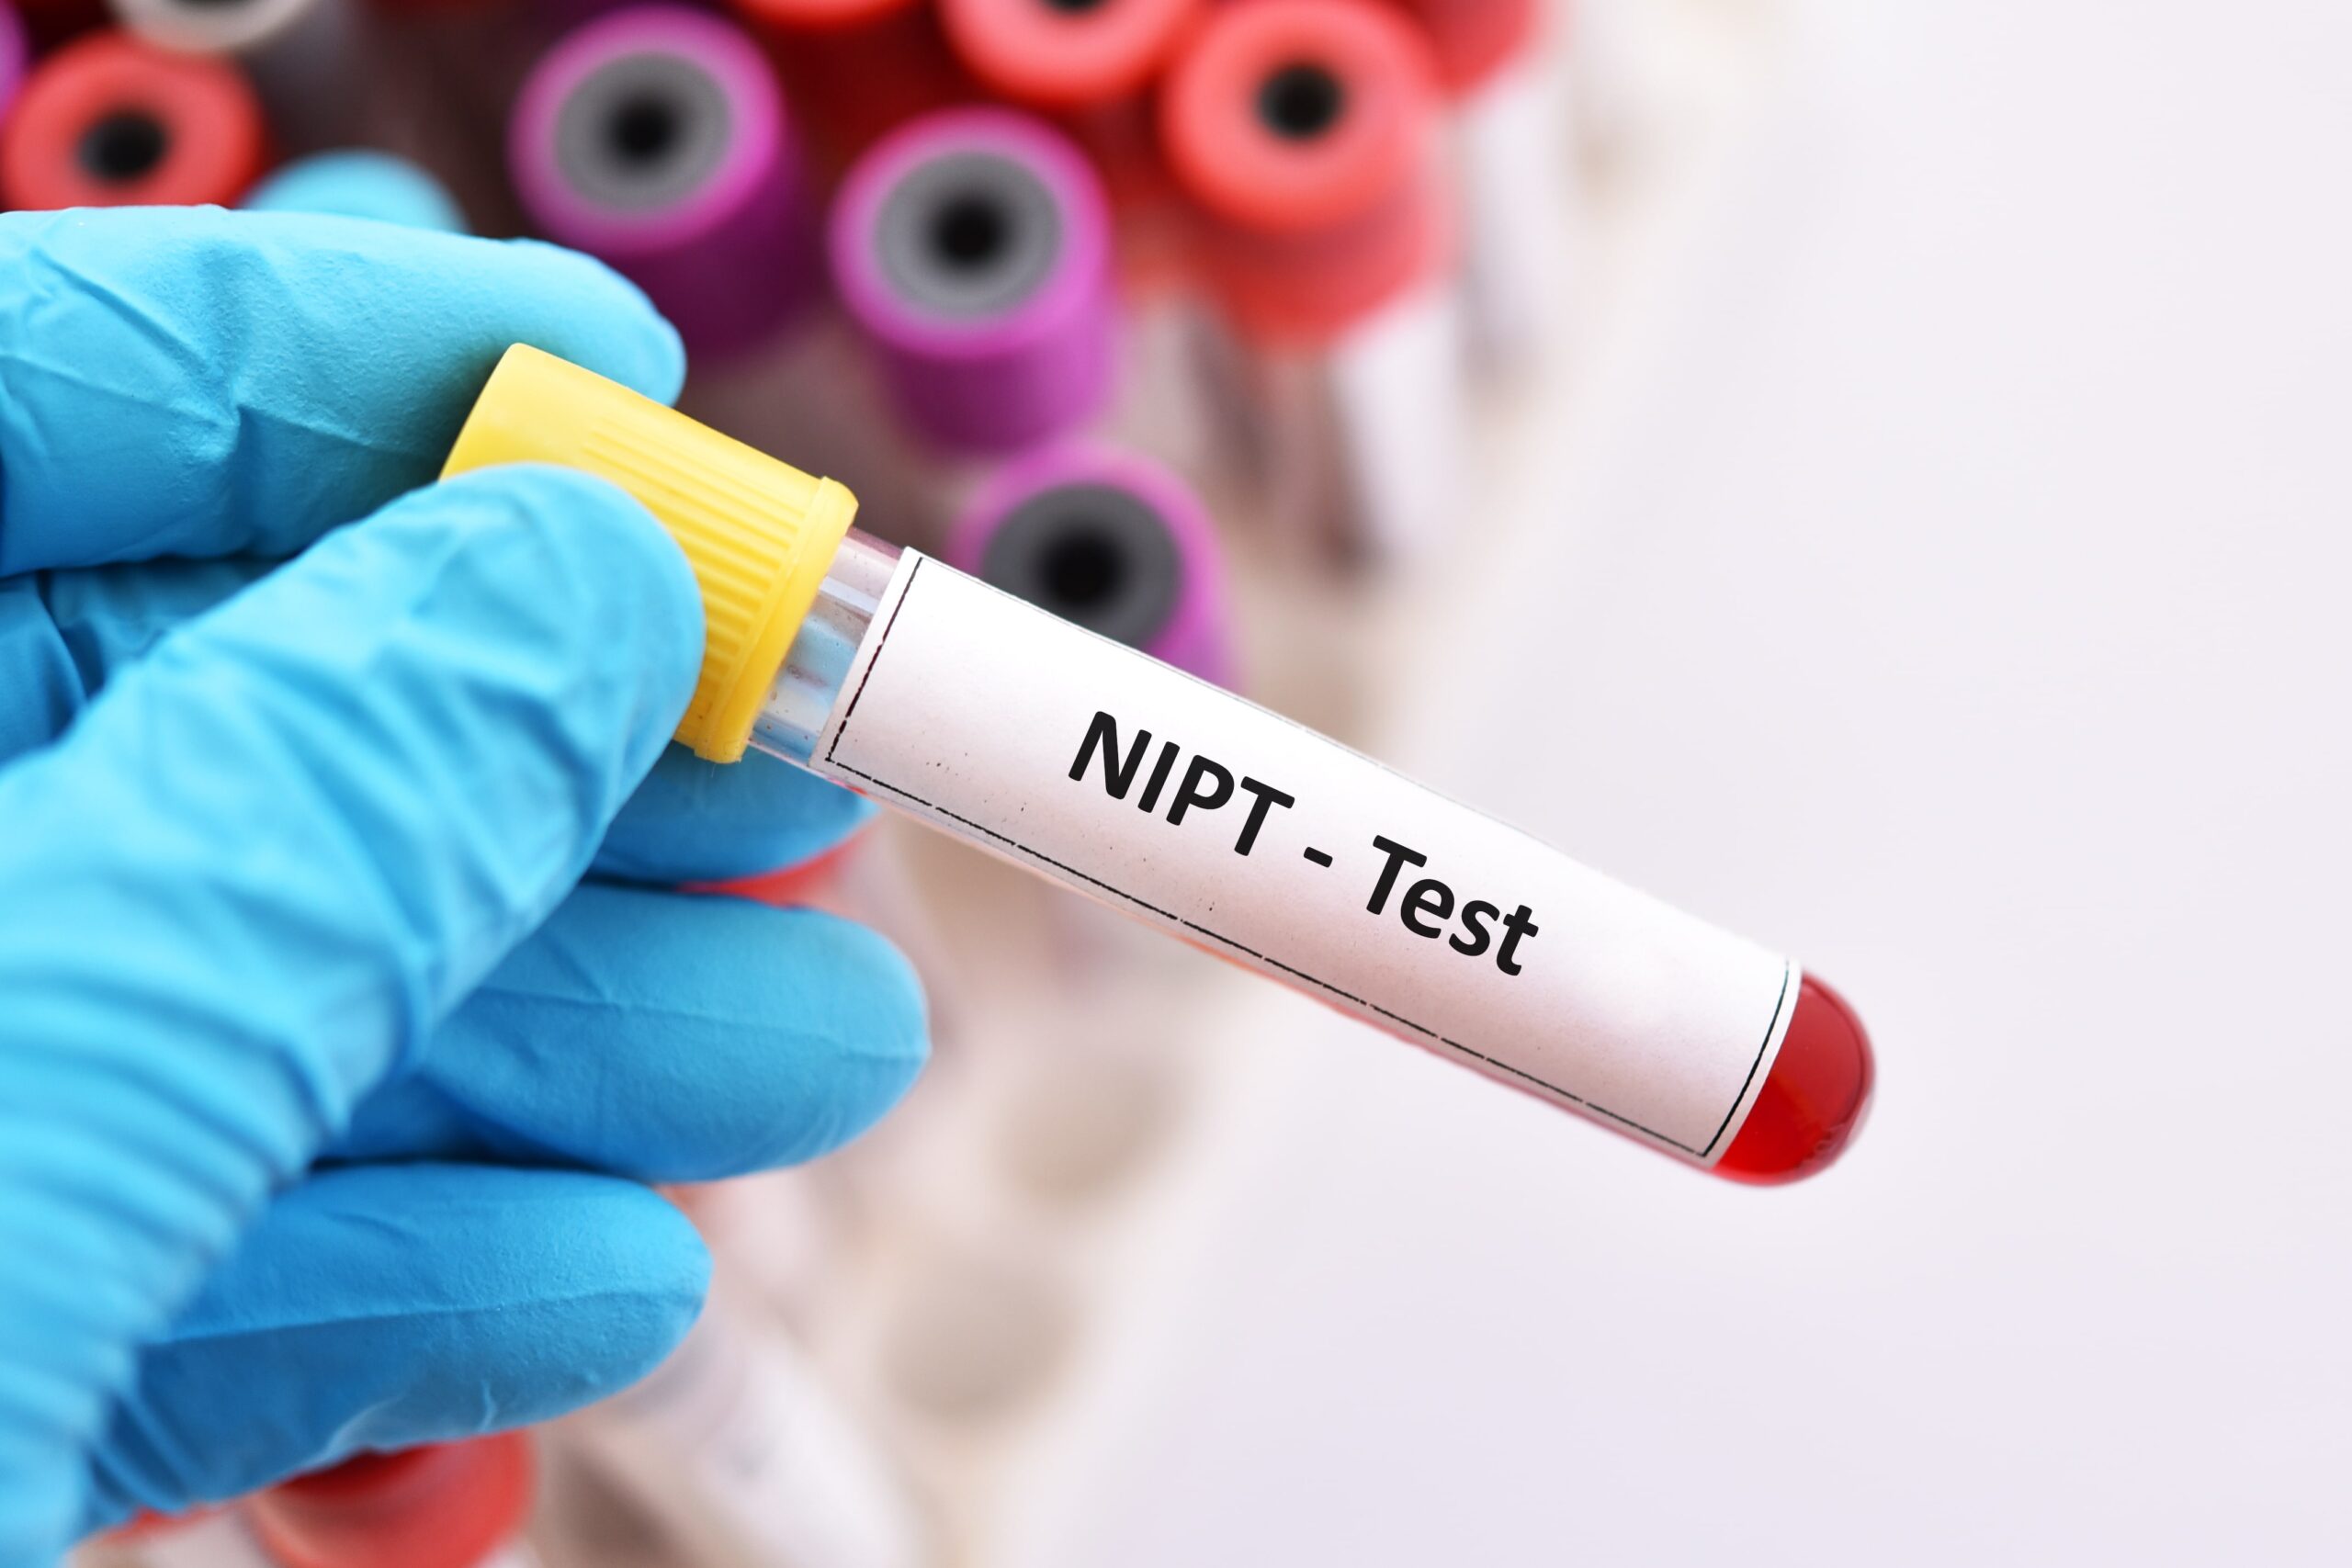 May 2022: NIPT tests